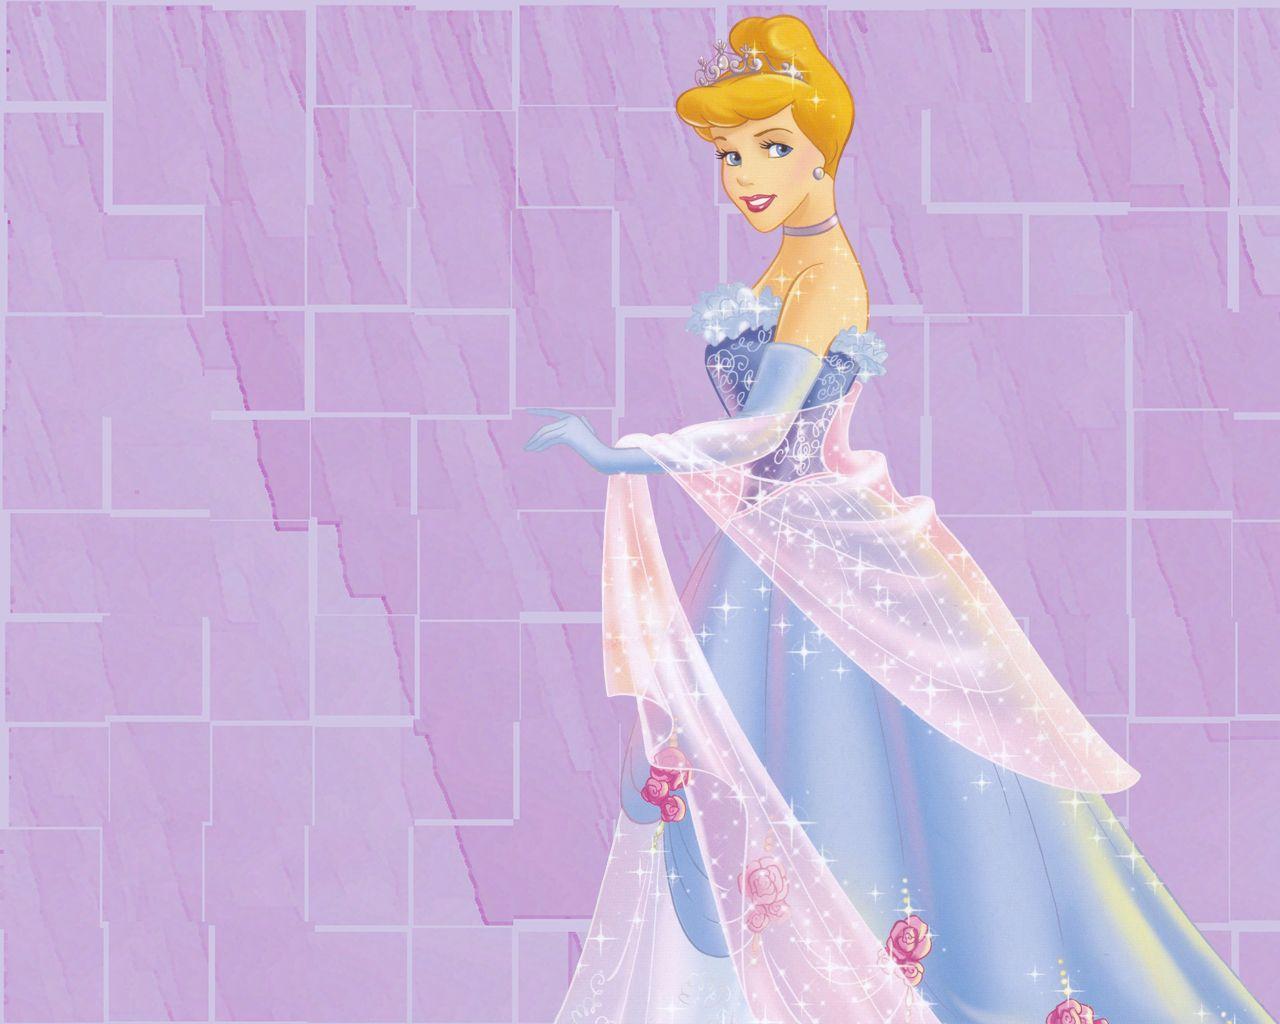 Princess Cinderella Cartoon Image Wallpaper for Phone